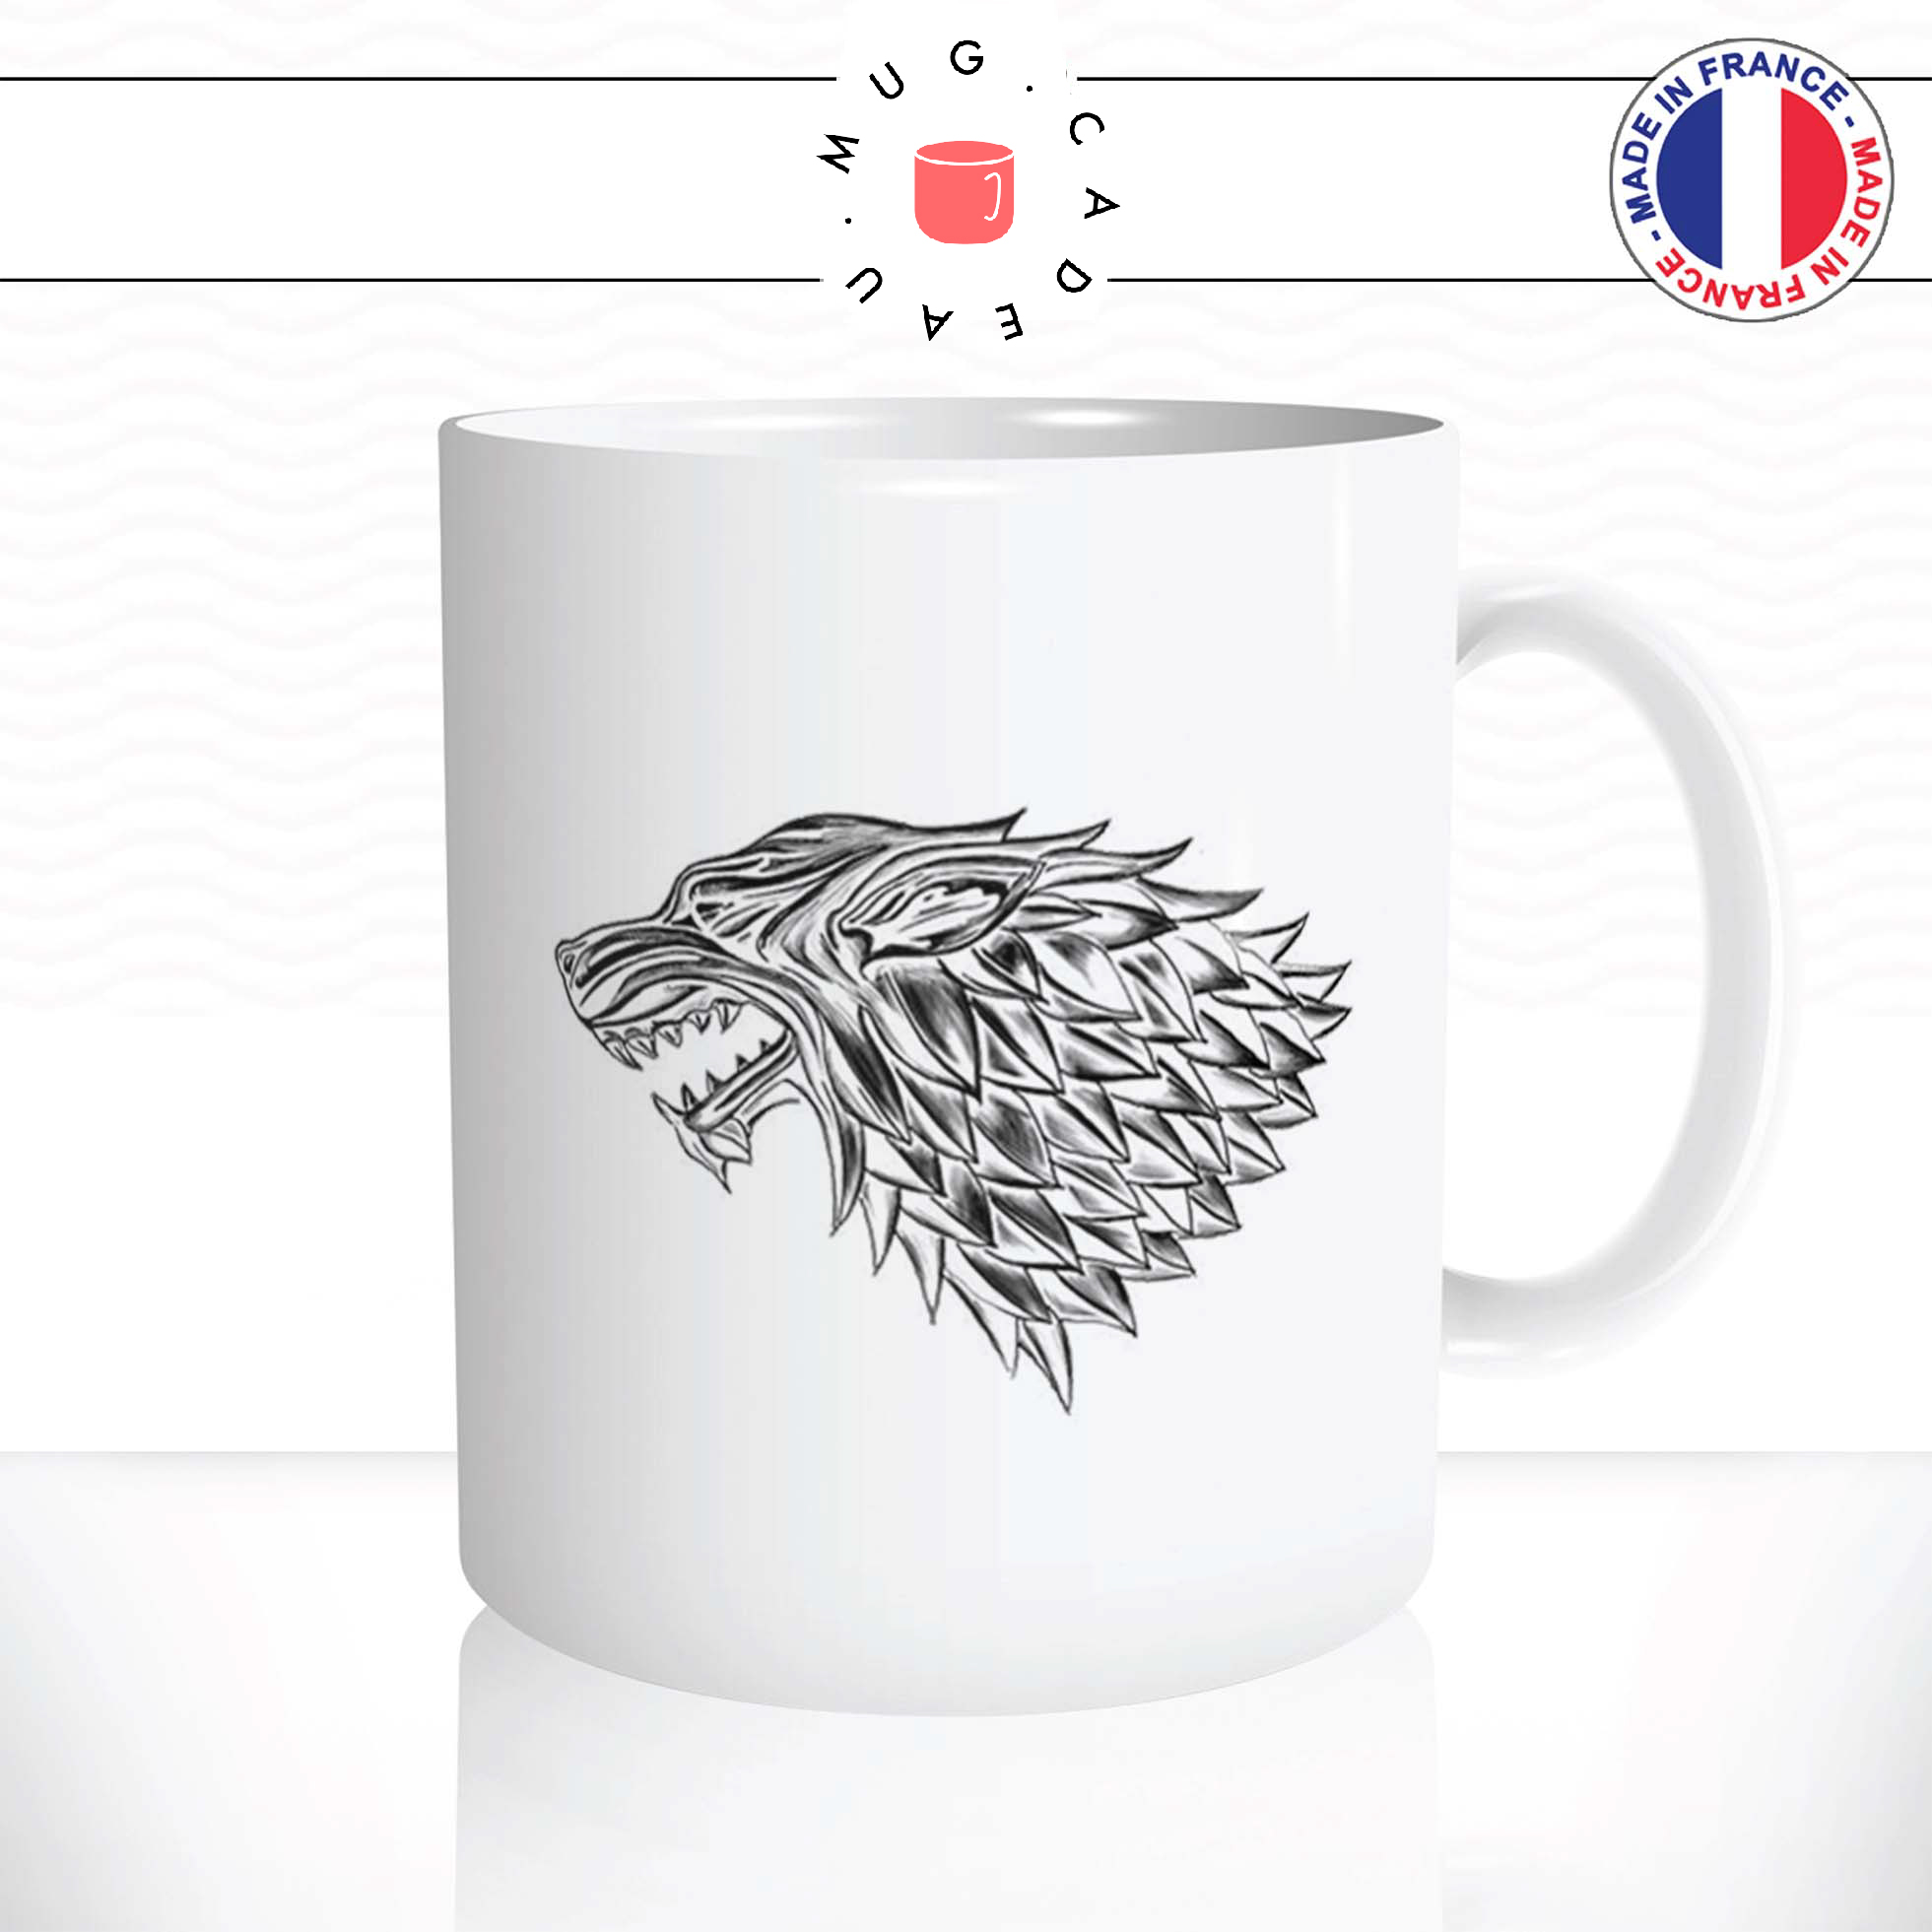 mug-tasse-ref2-film-serie-game-of-thrones-got-logo-loup-royaume-cafe-the-mugs-tasses-personnalise-anse-droite